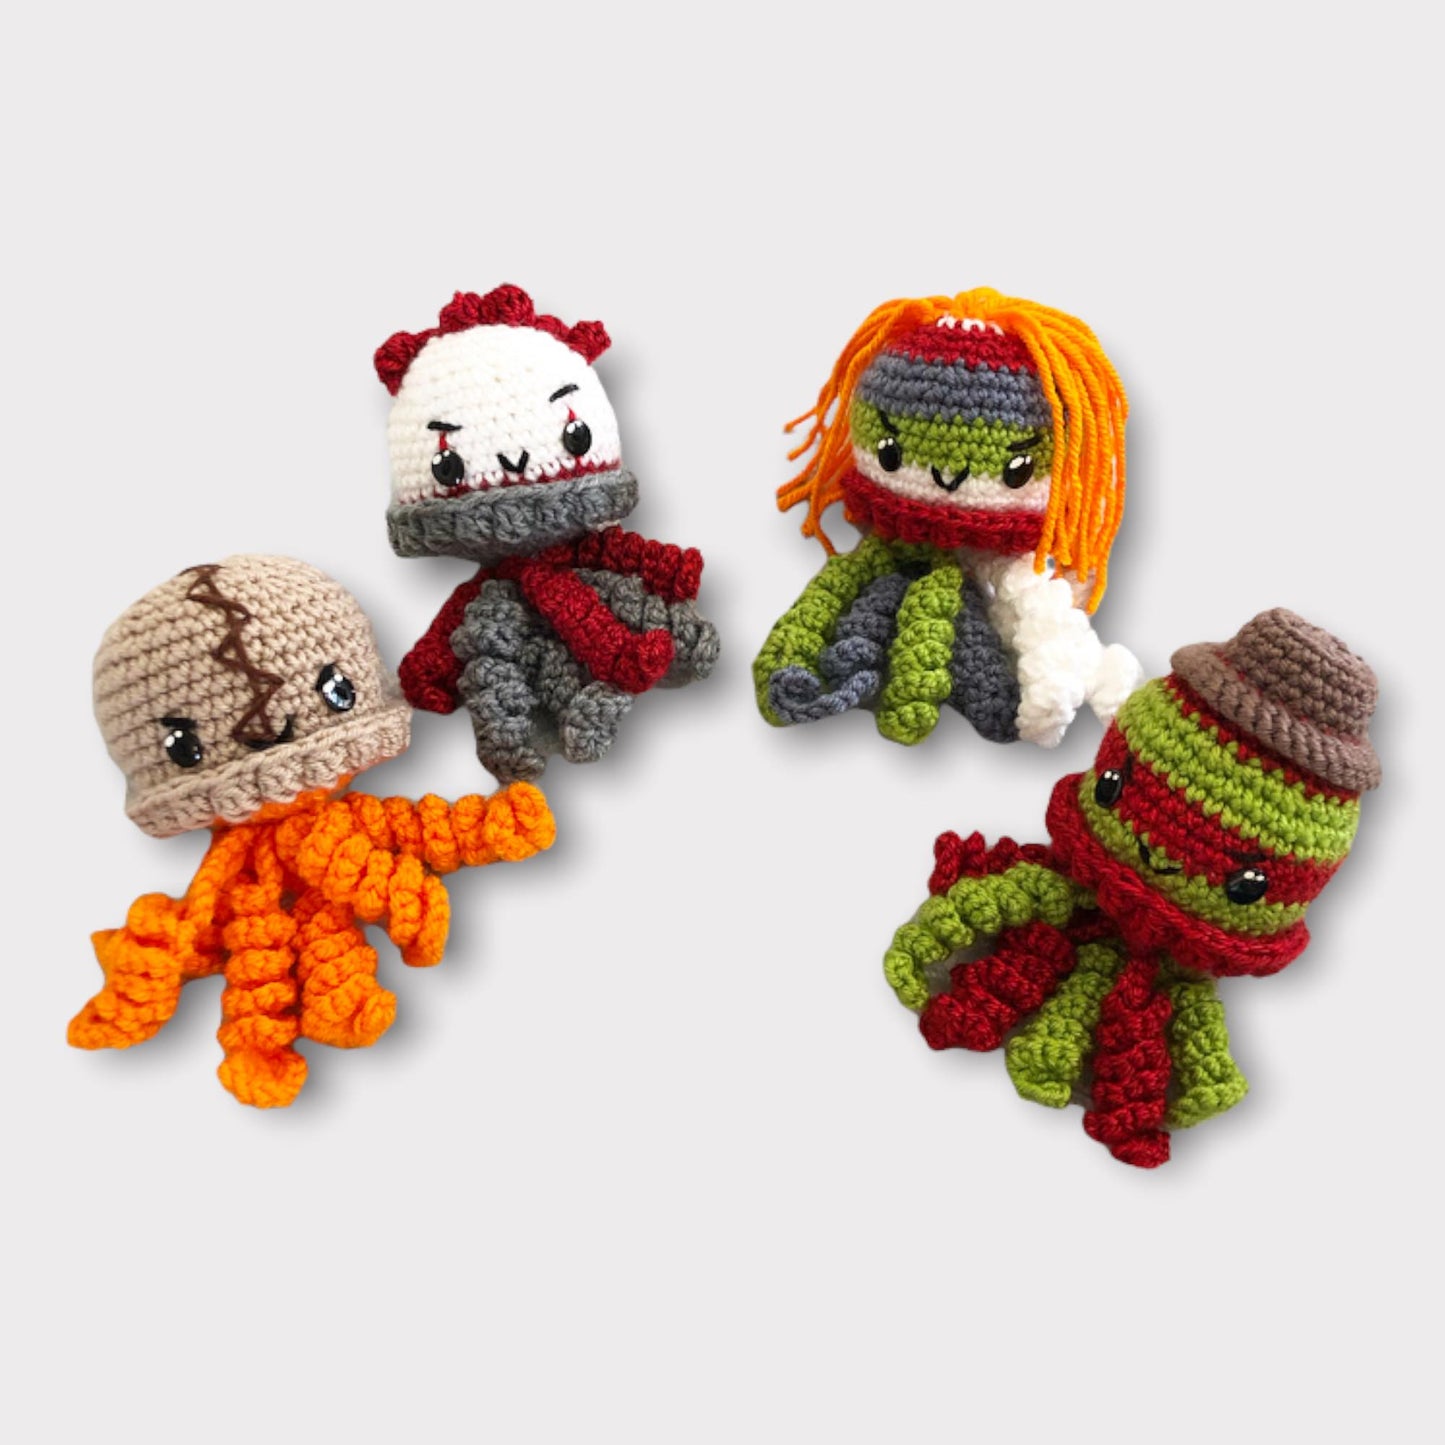 PATTERN PACK: Crochet horror villain jellies - Freddy, Pennywise, Chucky, Sam